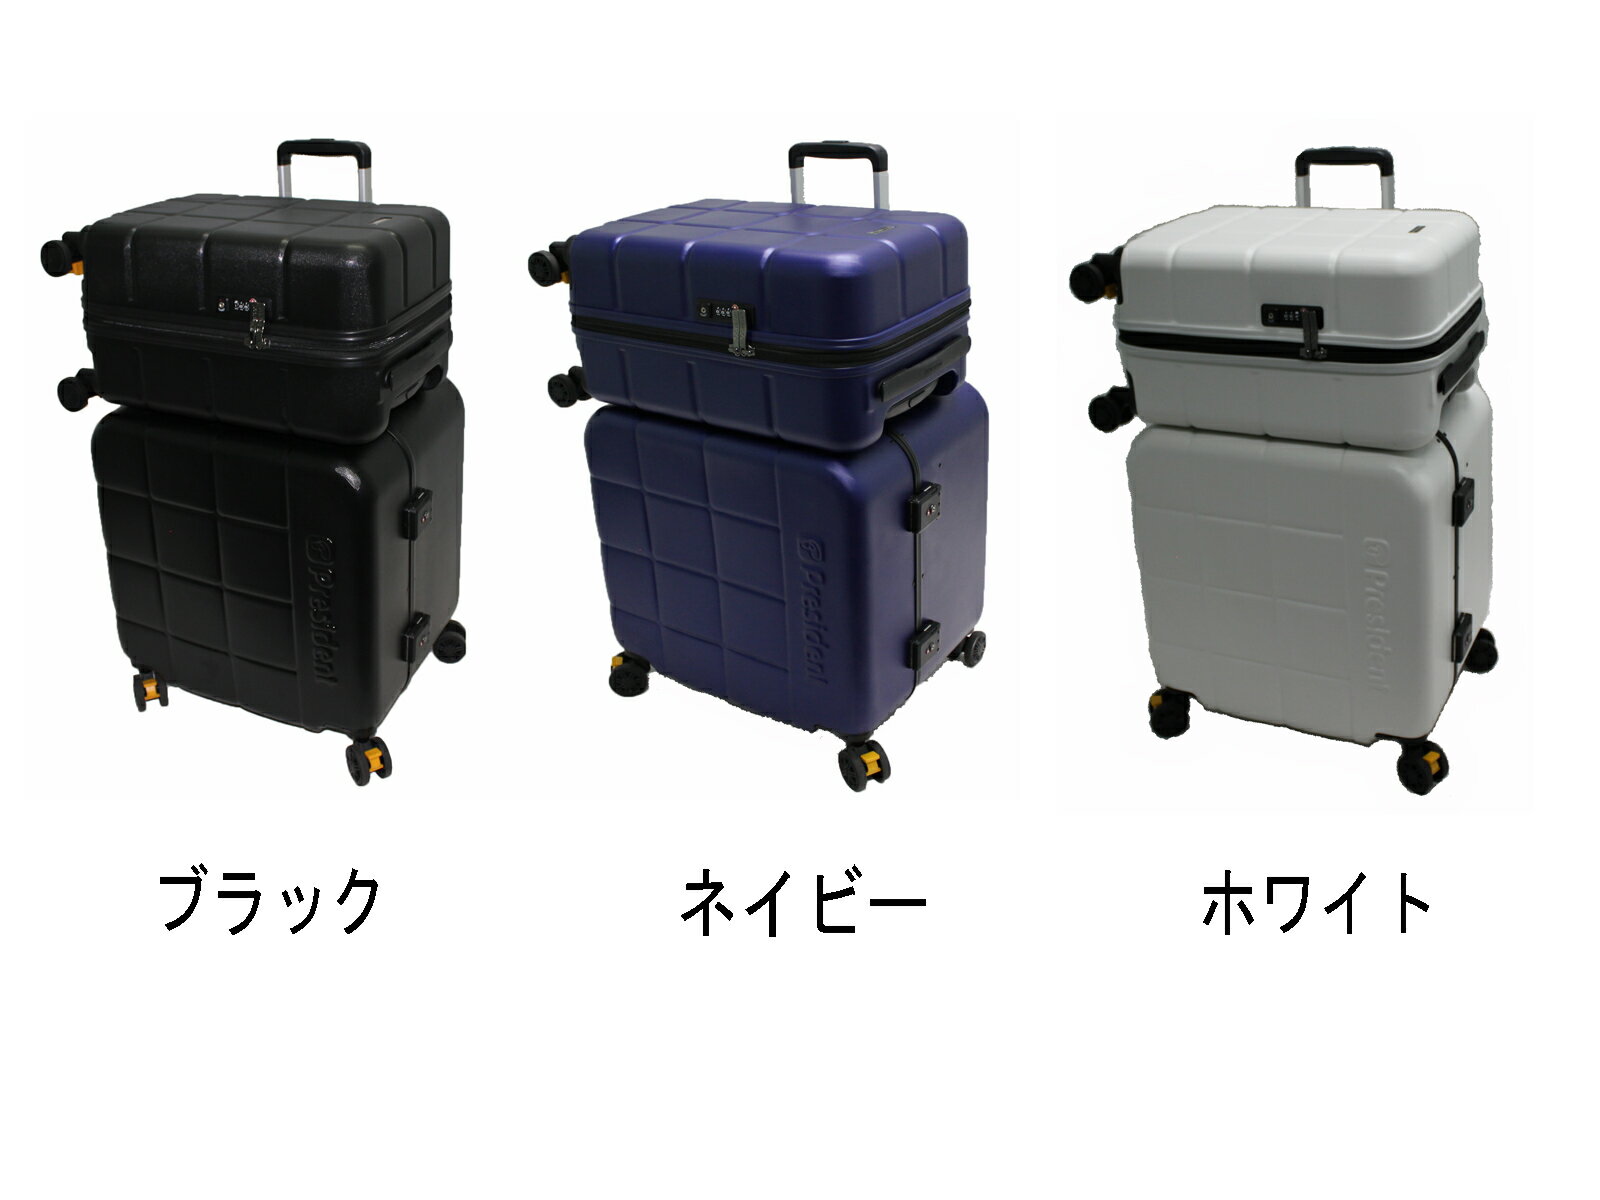 President　Kubiko　座れるスーツケース＋機内持込スーツケース　セット　Mサイズスーツケース＋Sサイズスーツケース　セット　セットで運べるスーツケース　家族旅行に最適　ファミリー旅行に最適 Lサイズ容量　合計容量93L 5306-20,24